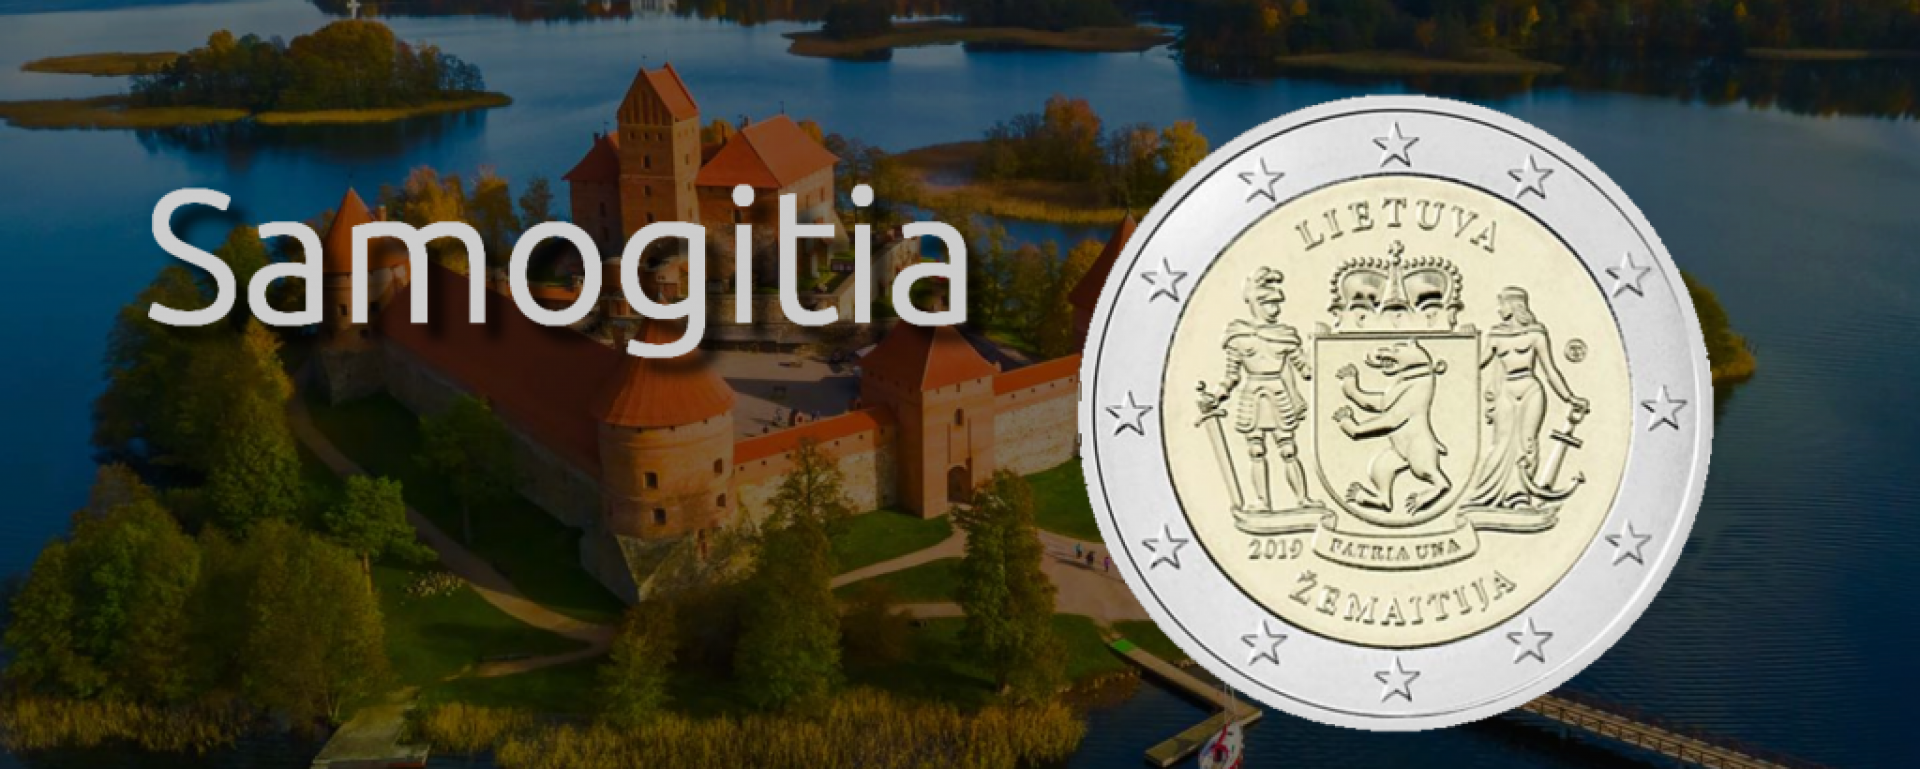 Už o sedem dní bude emitovaná nová 2€ minca Samogitia